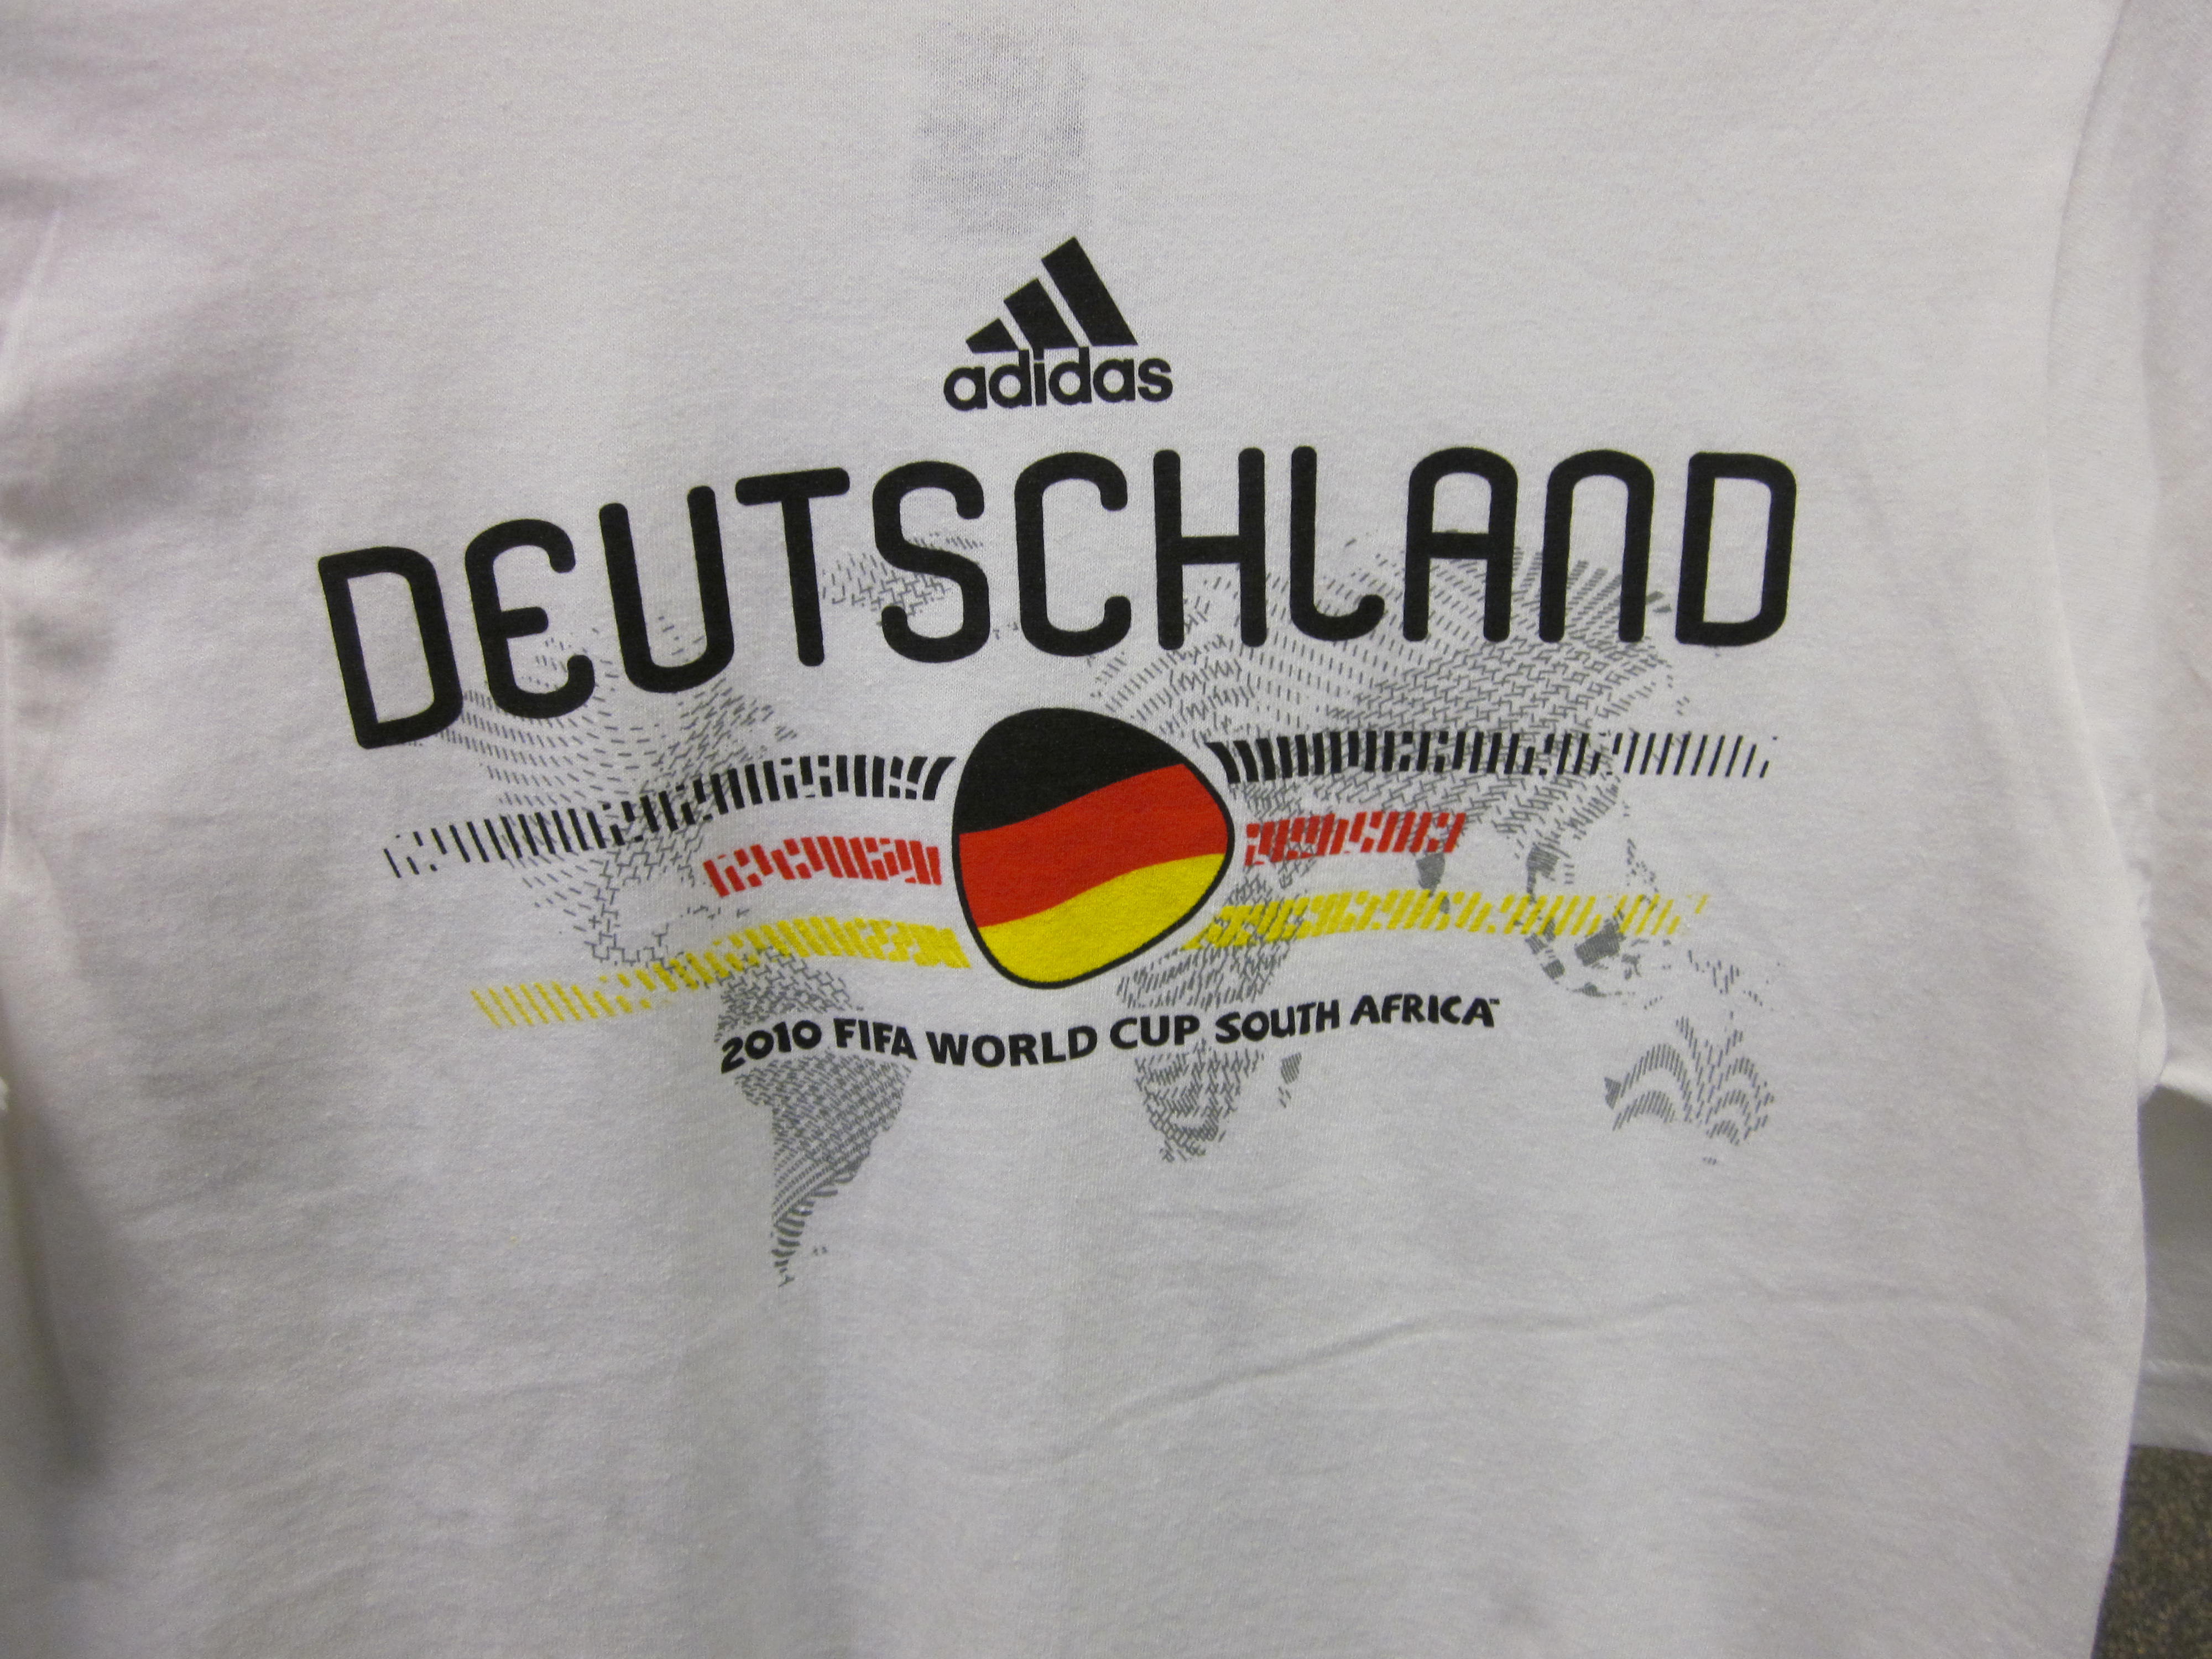 File:White Adidas Cup Germany shirt.JPG Wikimedia Commons